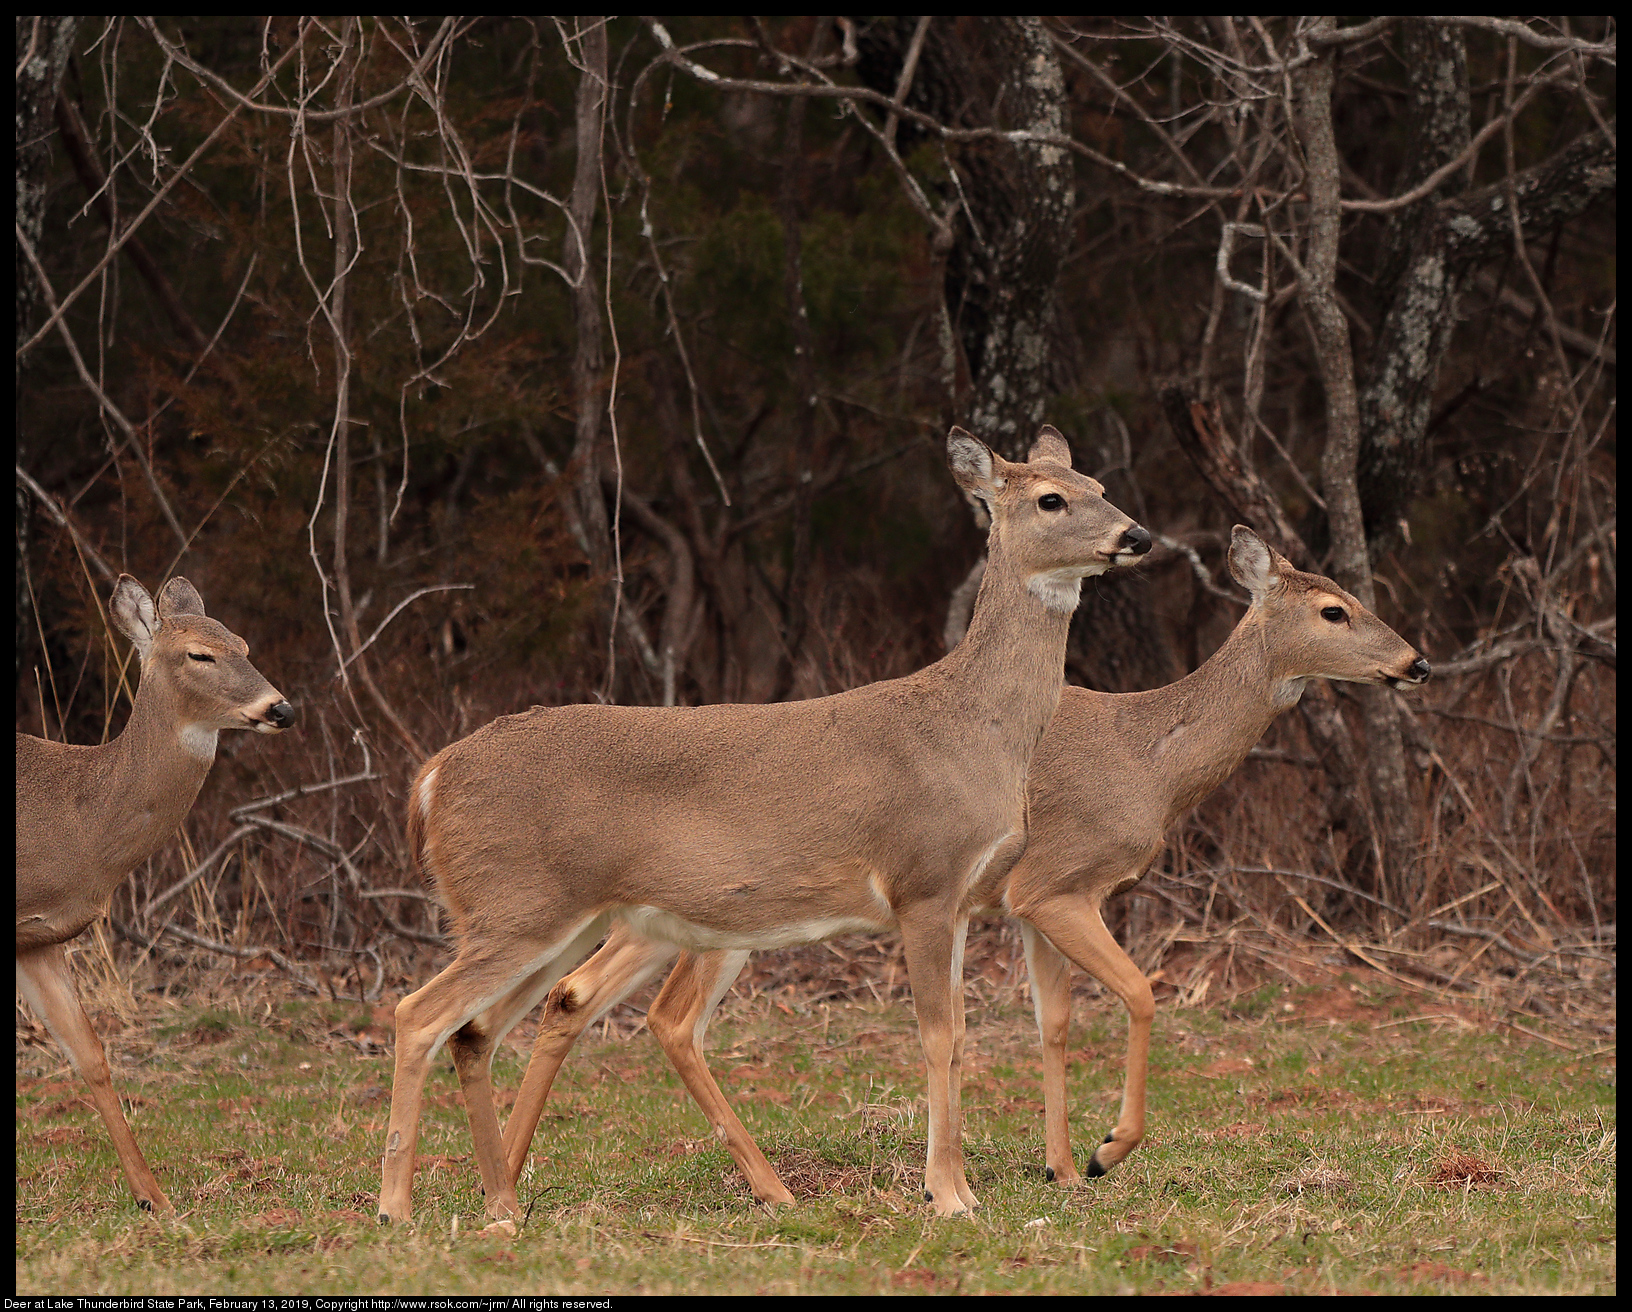 Deer at Lake Thunderbird State Park, February 13, 2019